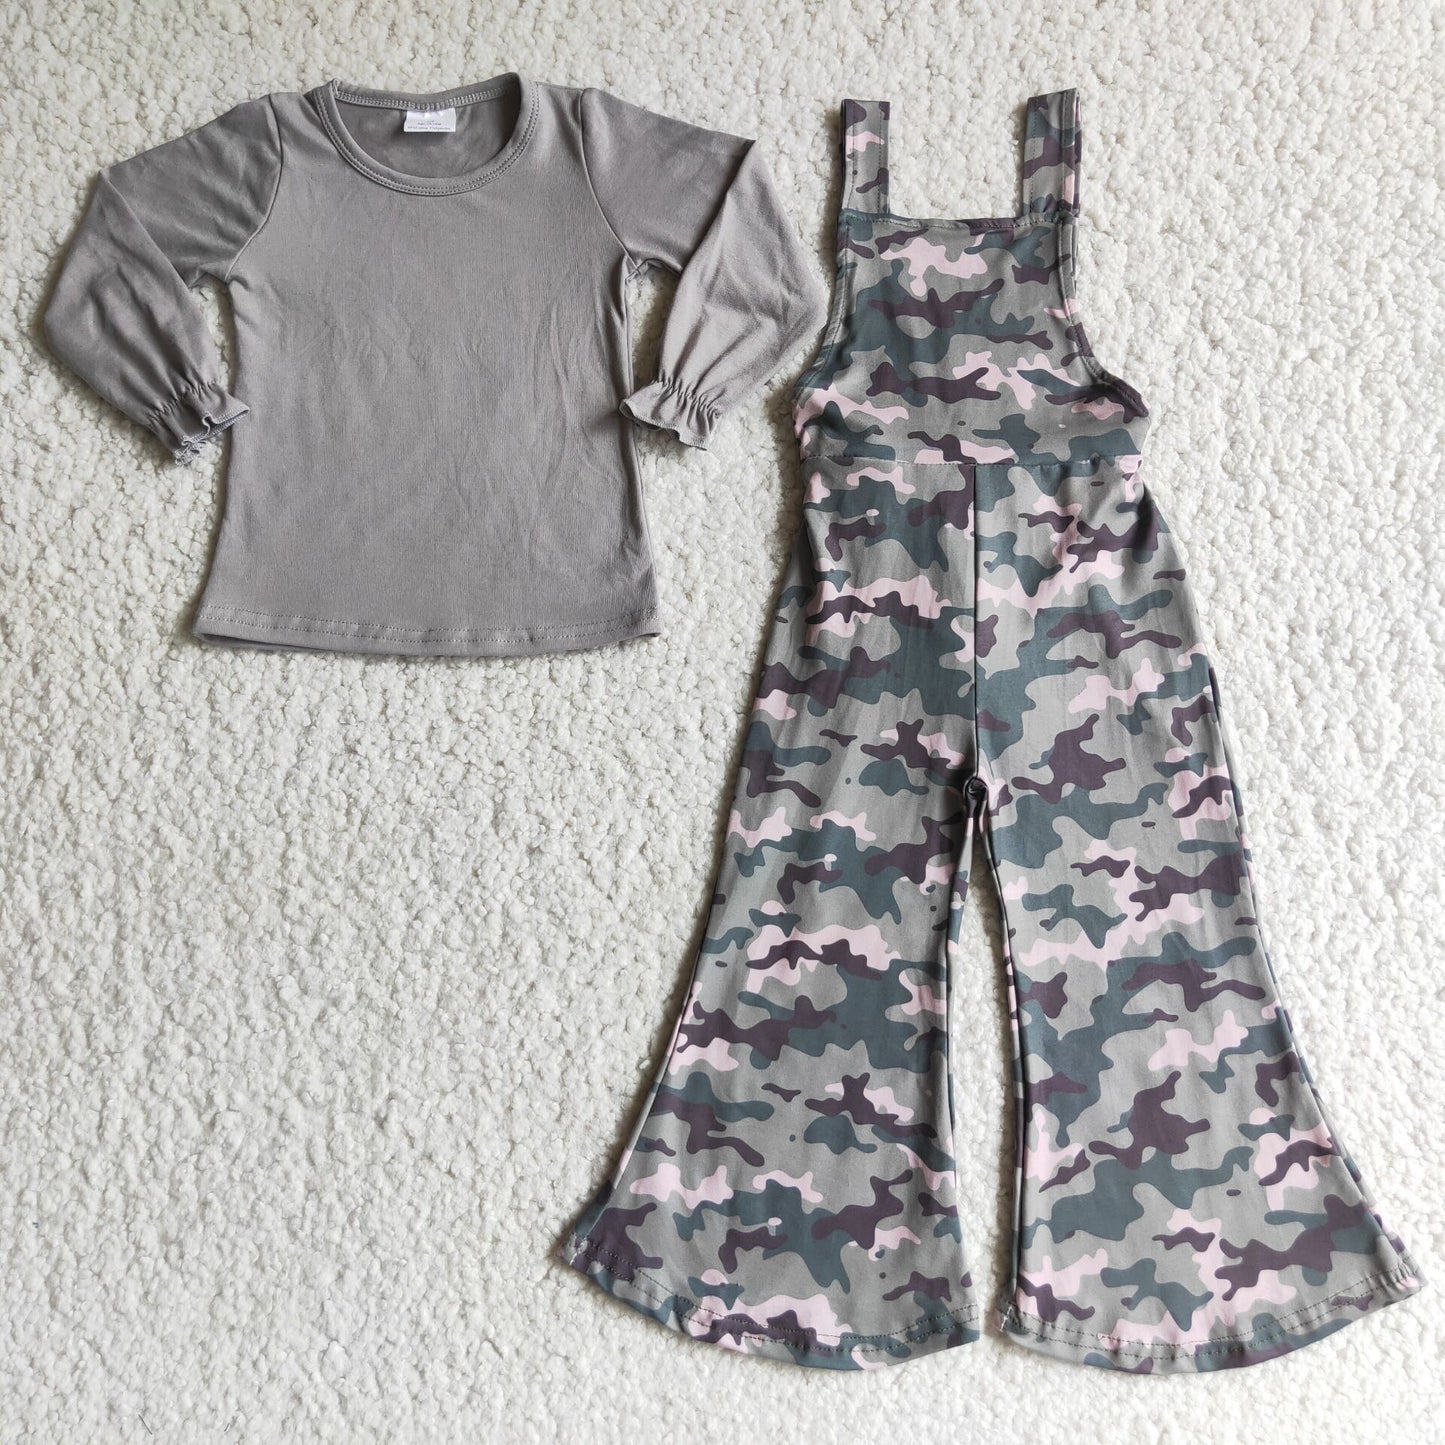 Grey cotton top camo overalls girls clothes